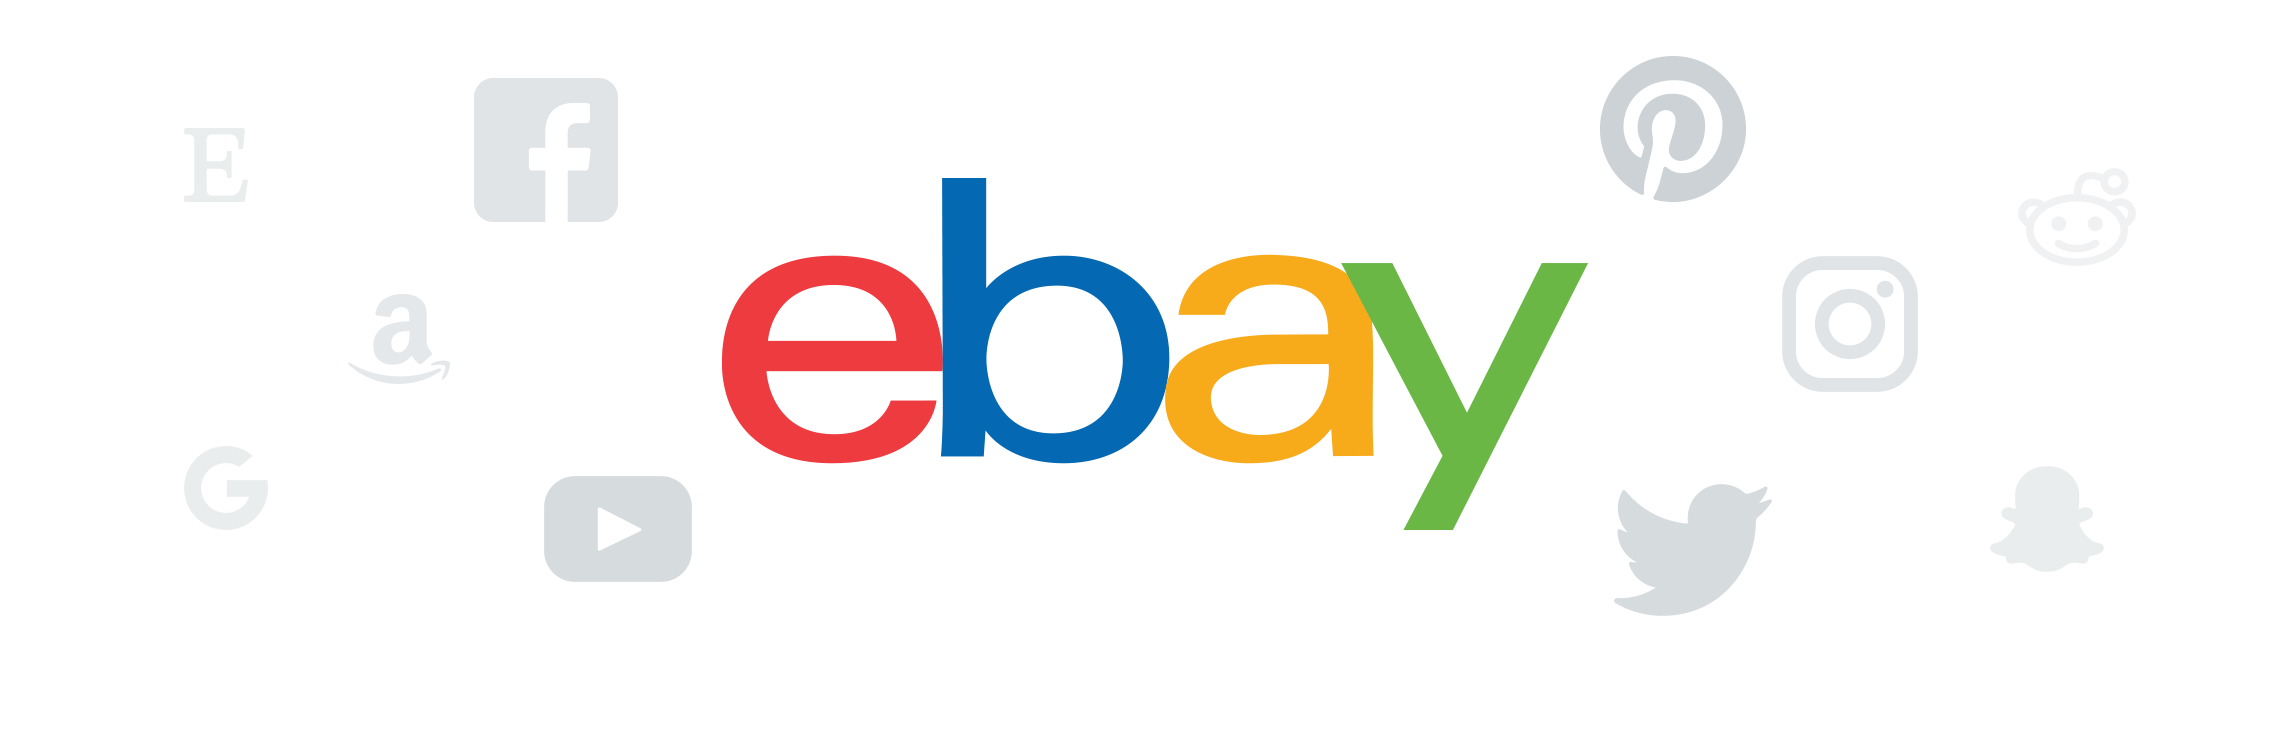 Ebay with opencart inetgration